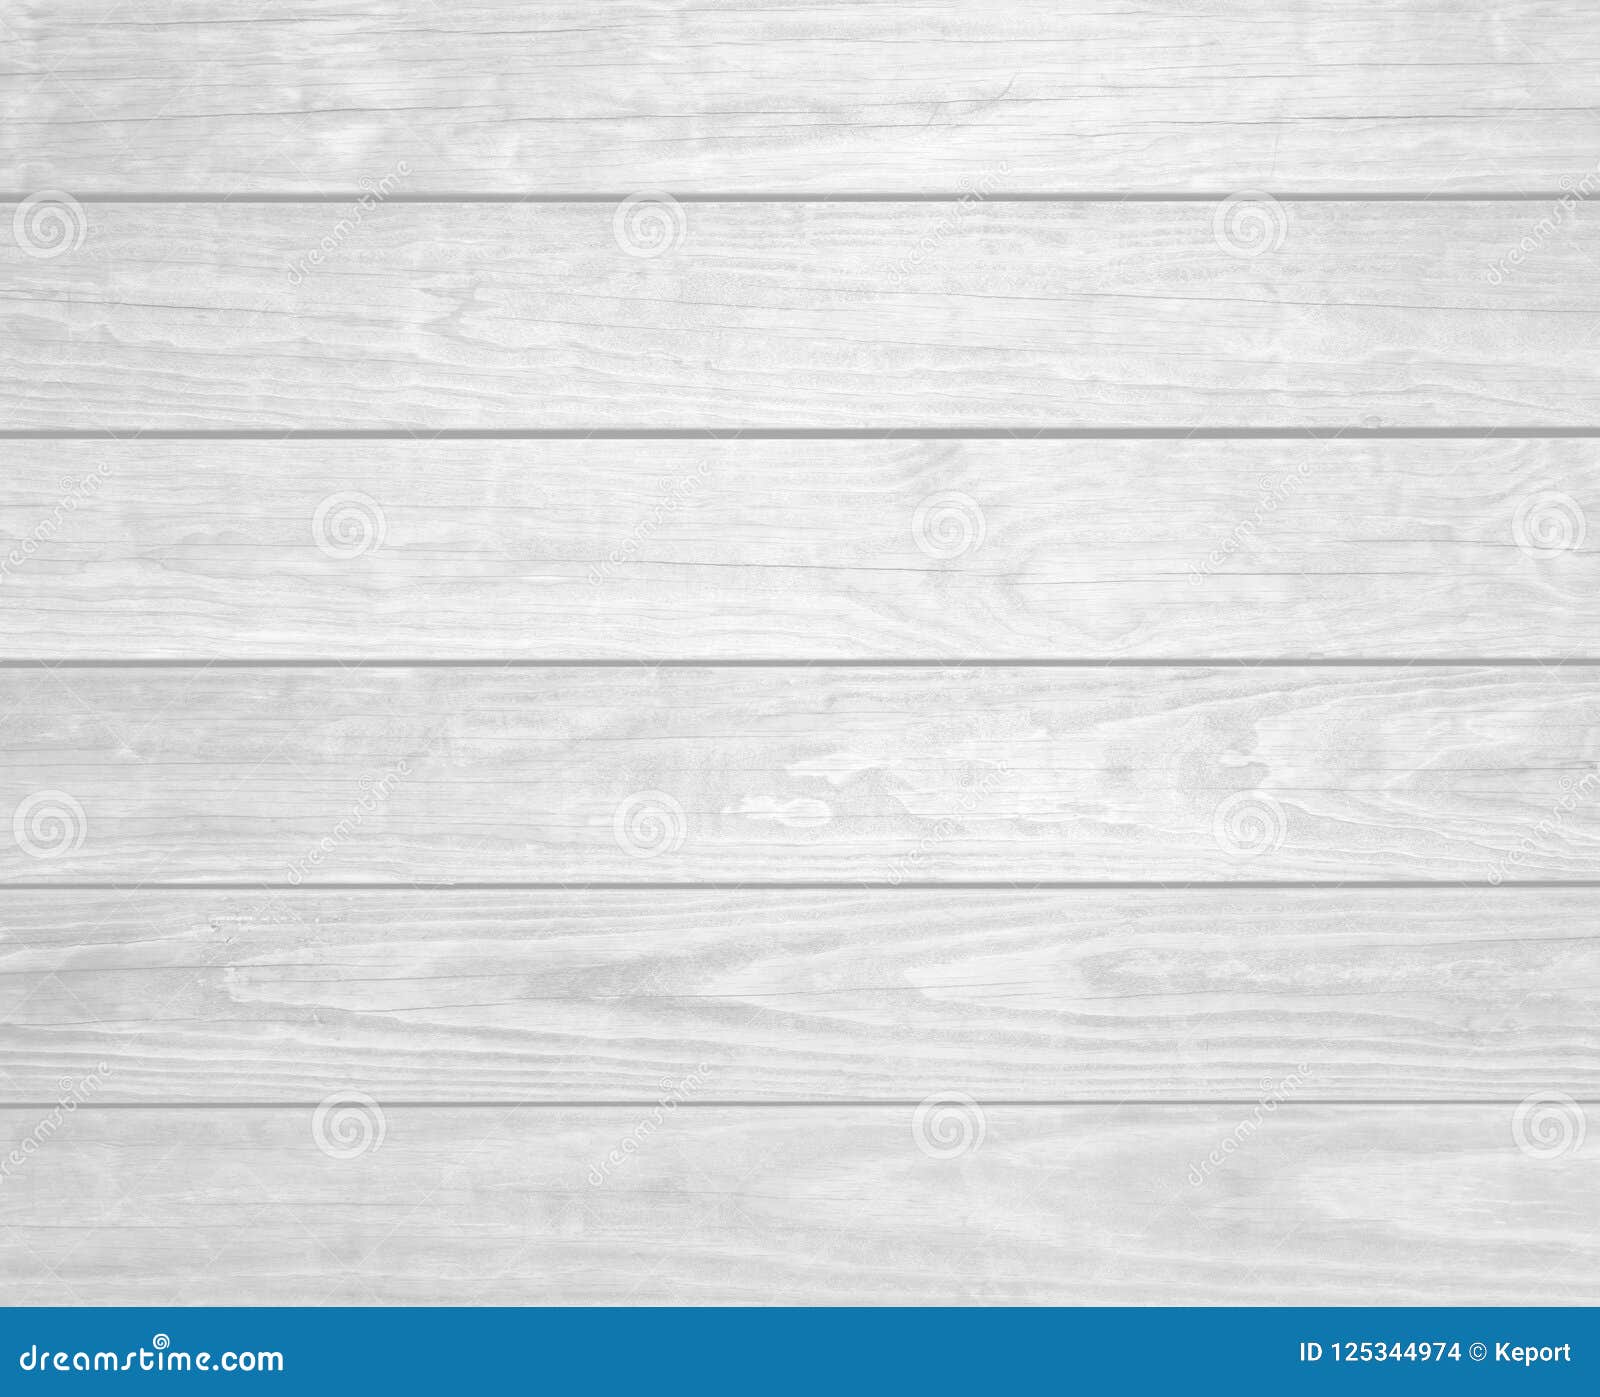 Elegant Wooden Background Texture Light Grey Stock Photo - Image of wood,  background: 125344974